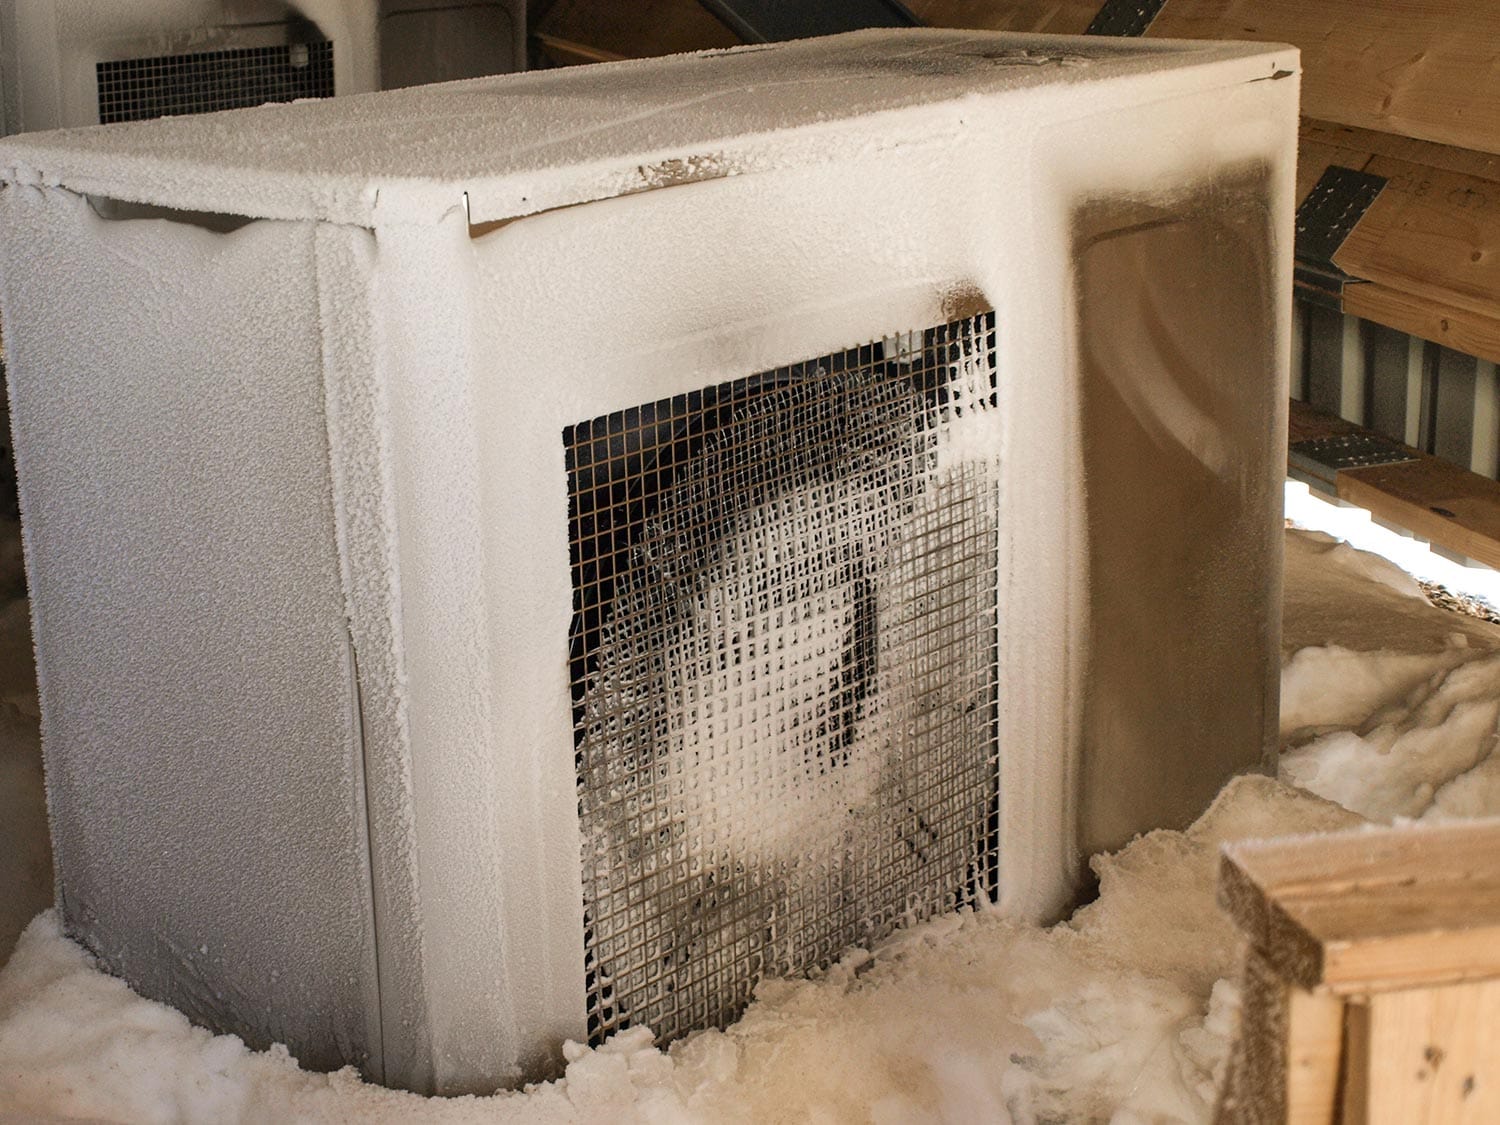 Frozen heat pump